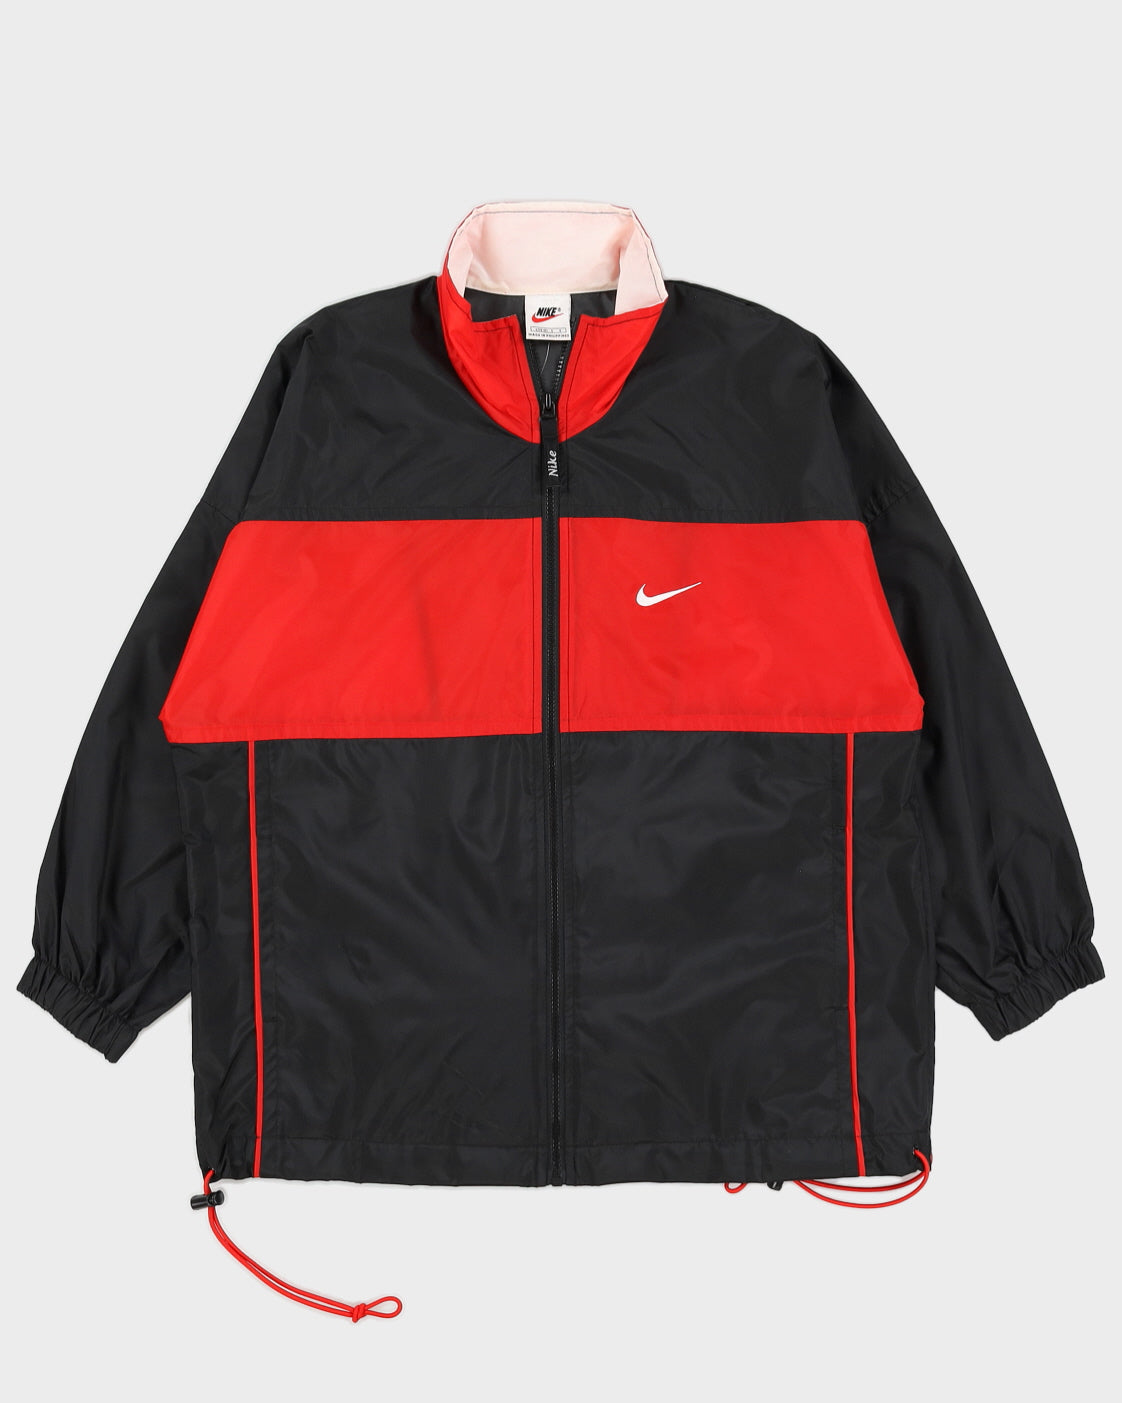 titel detaljer lærer Vintage 90'er Nike sort / rød jakke - m – Rokit